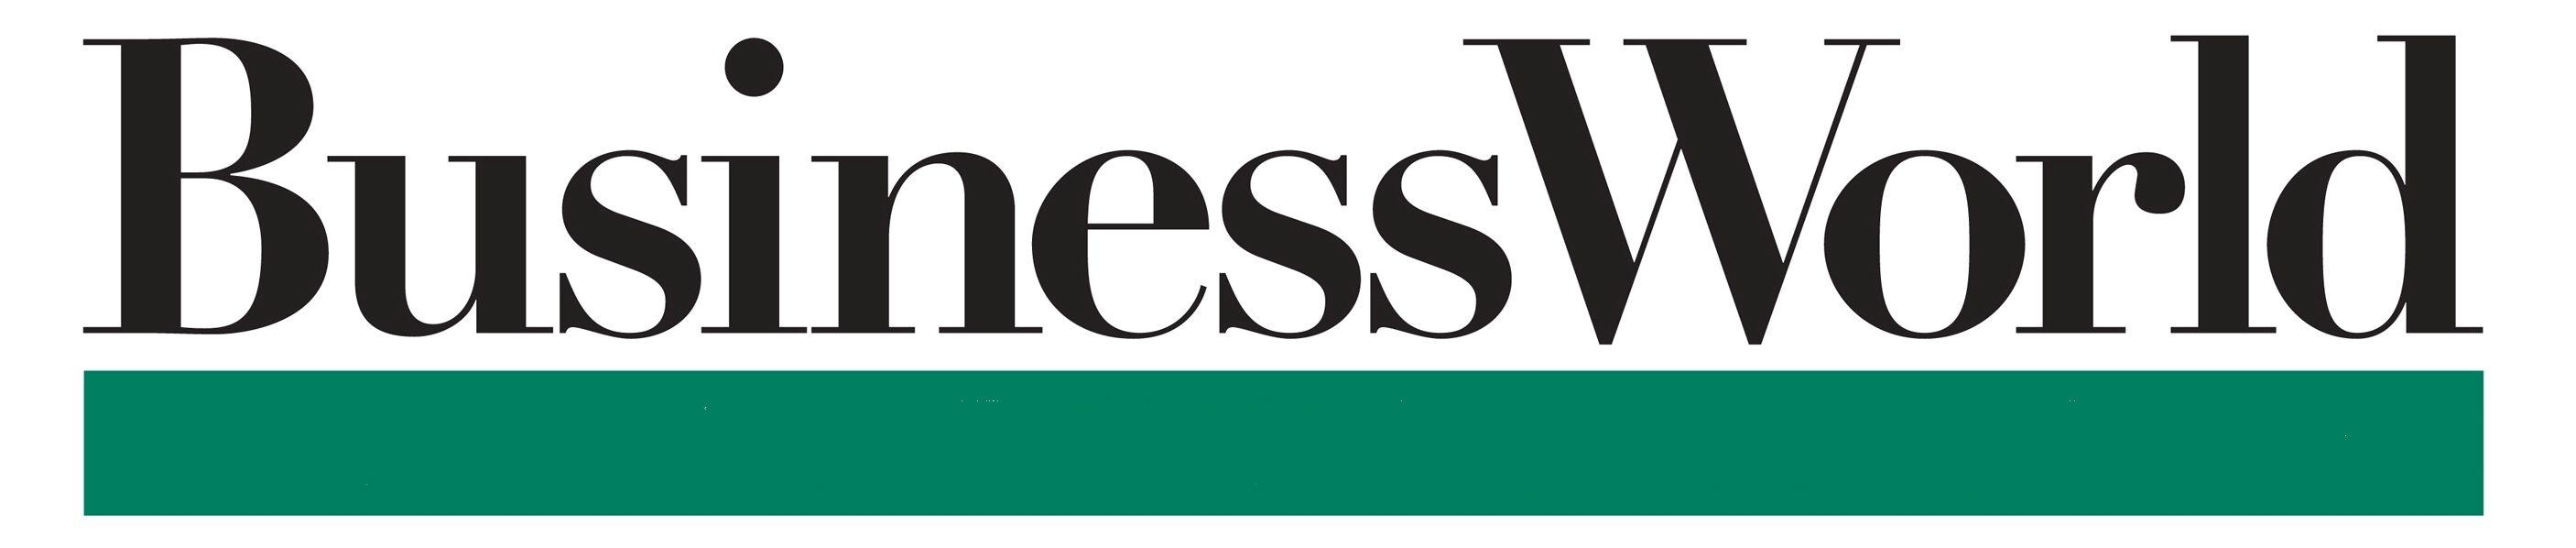 World Business Logo - BusinessWorld